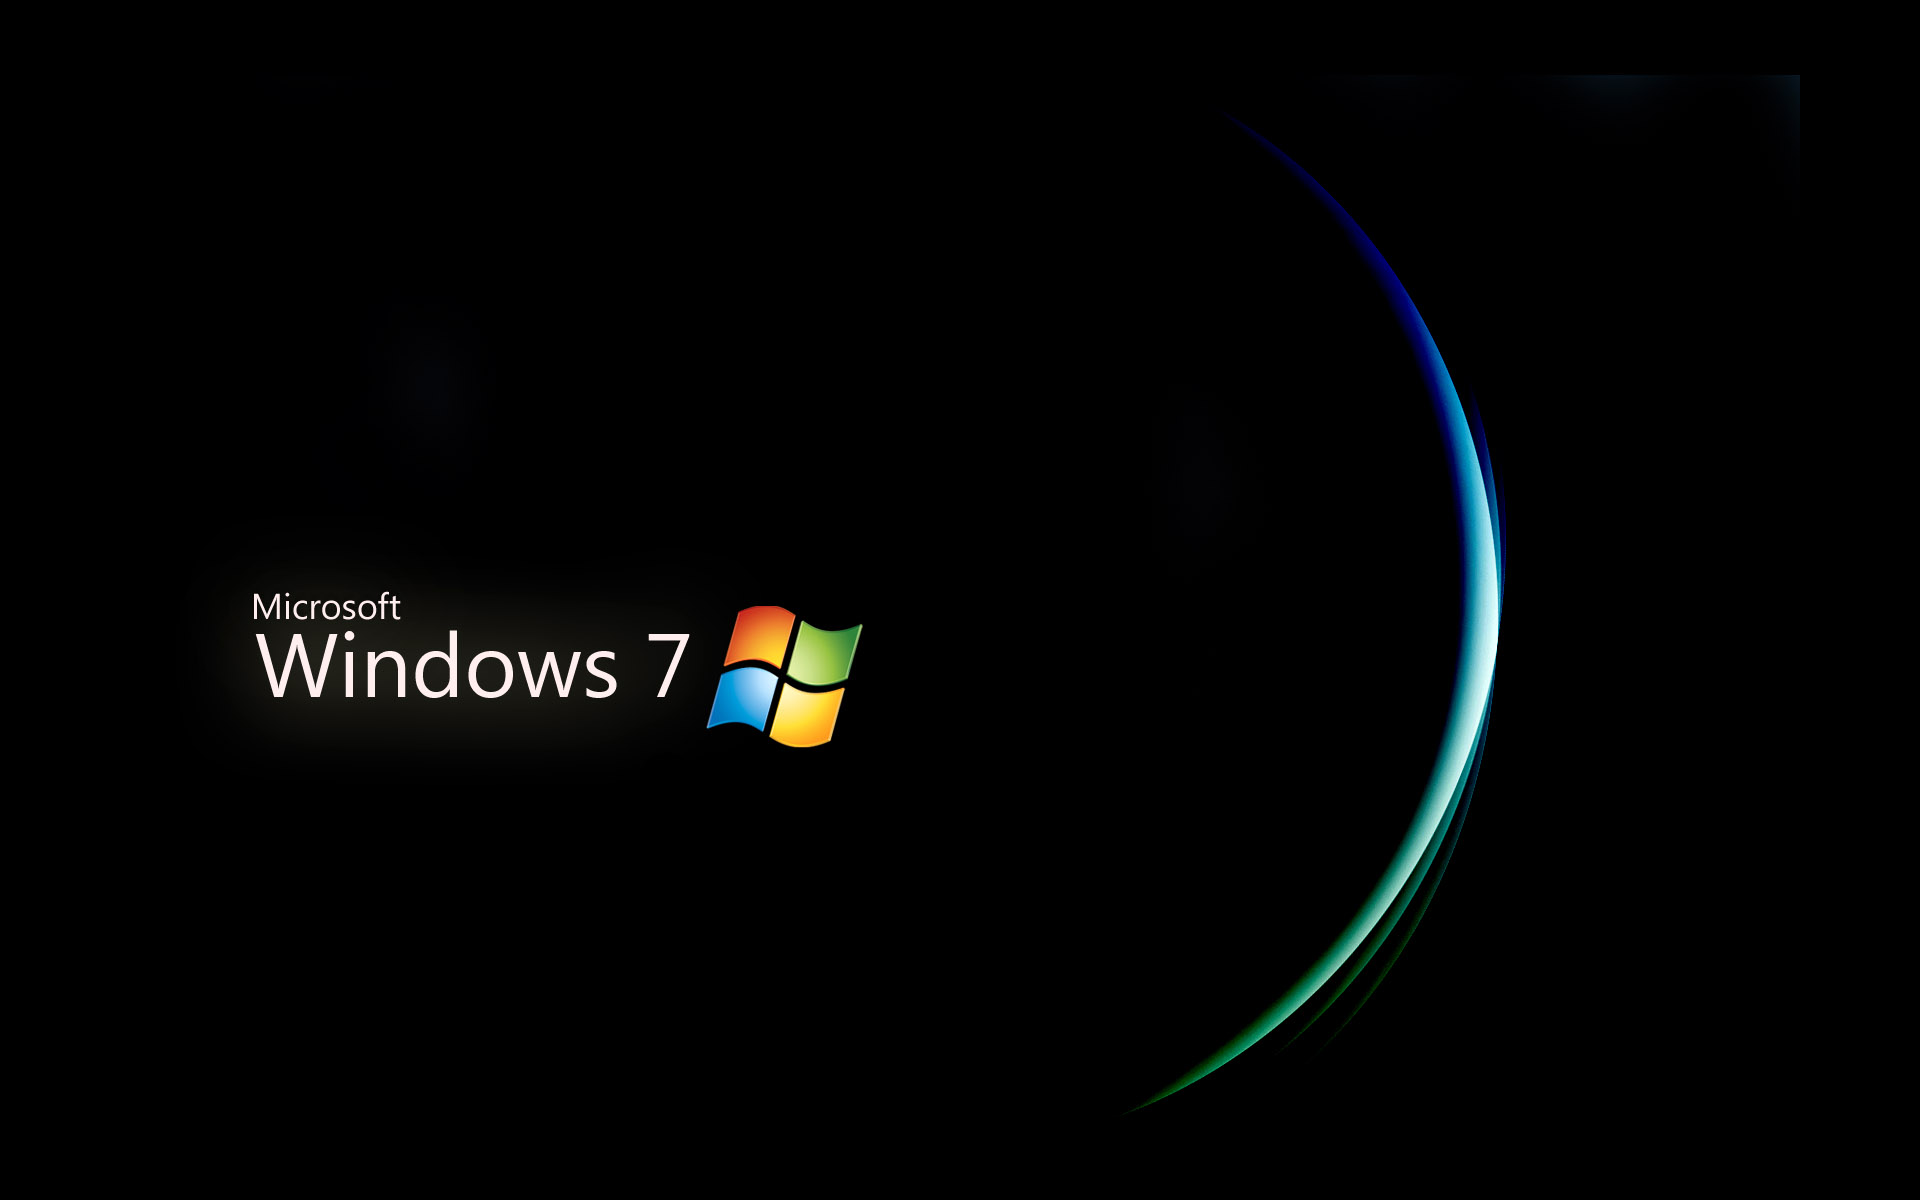 microsoft, windows, technology, windows 7, logo